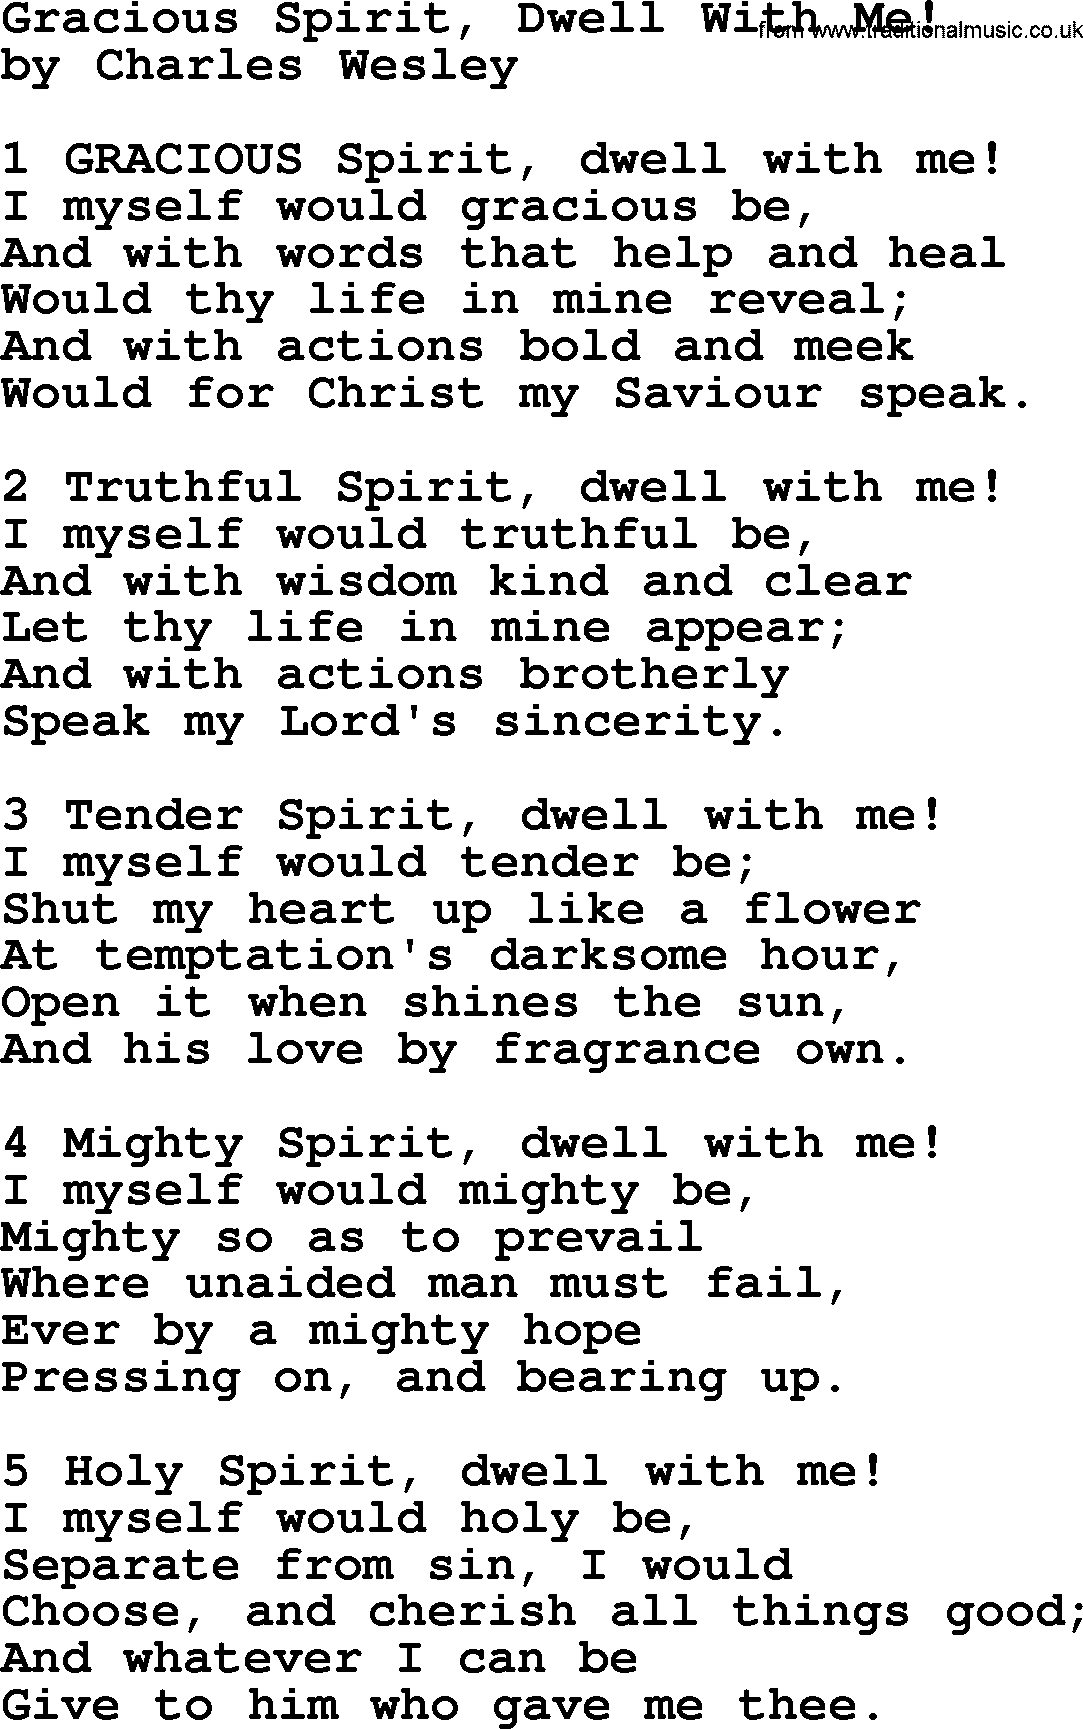 Charles Wesley hymn: Gracious Spirit, Dwell With Me!, lyrics